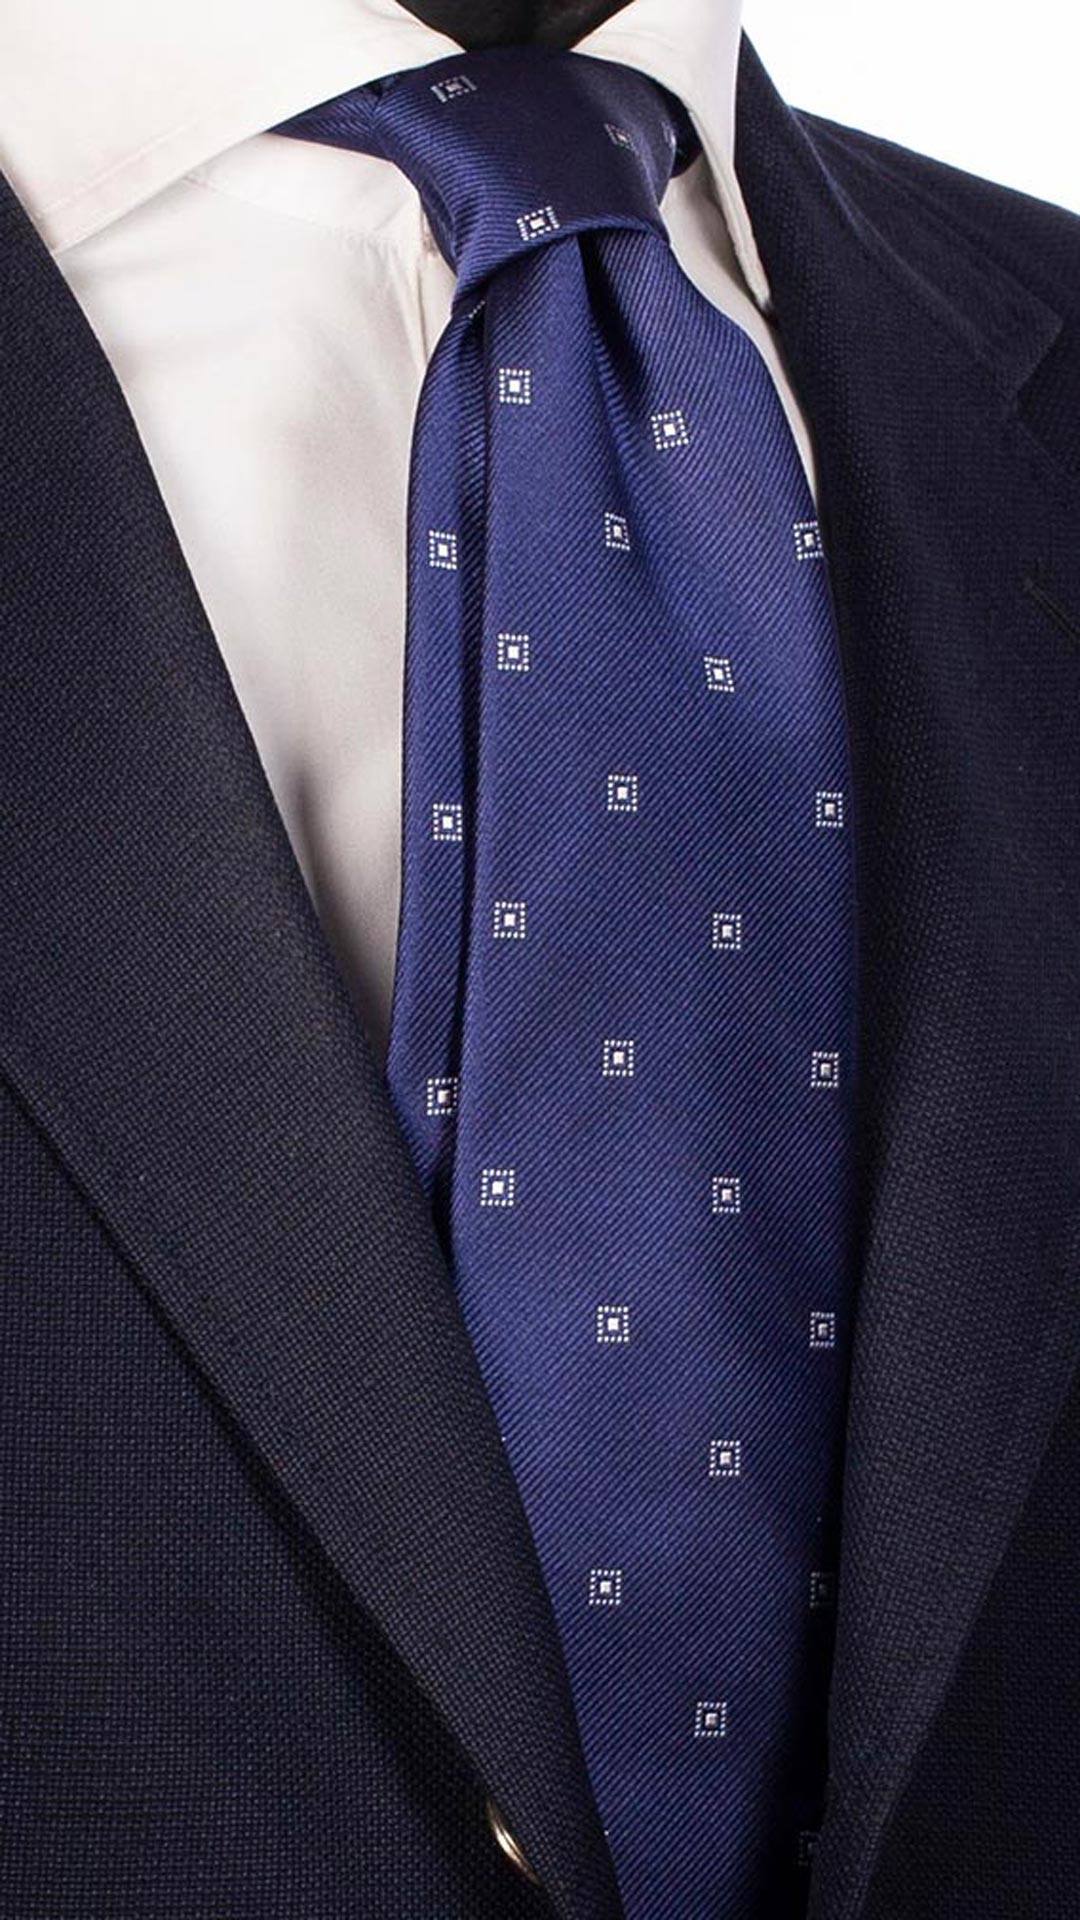 Cravatta da Cerimonia di Seta Blu Navy Fantasia Bianca CY2748 Made in Italy Graffeo Cravatte